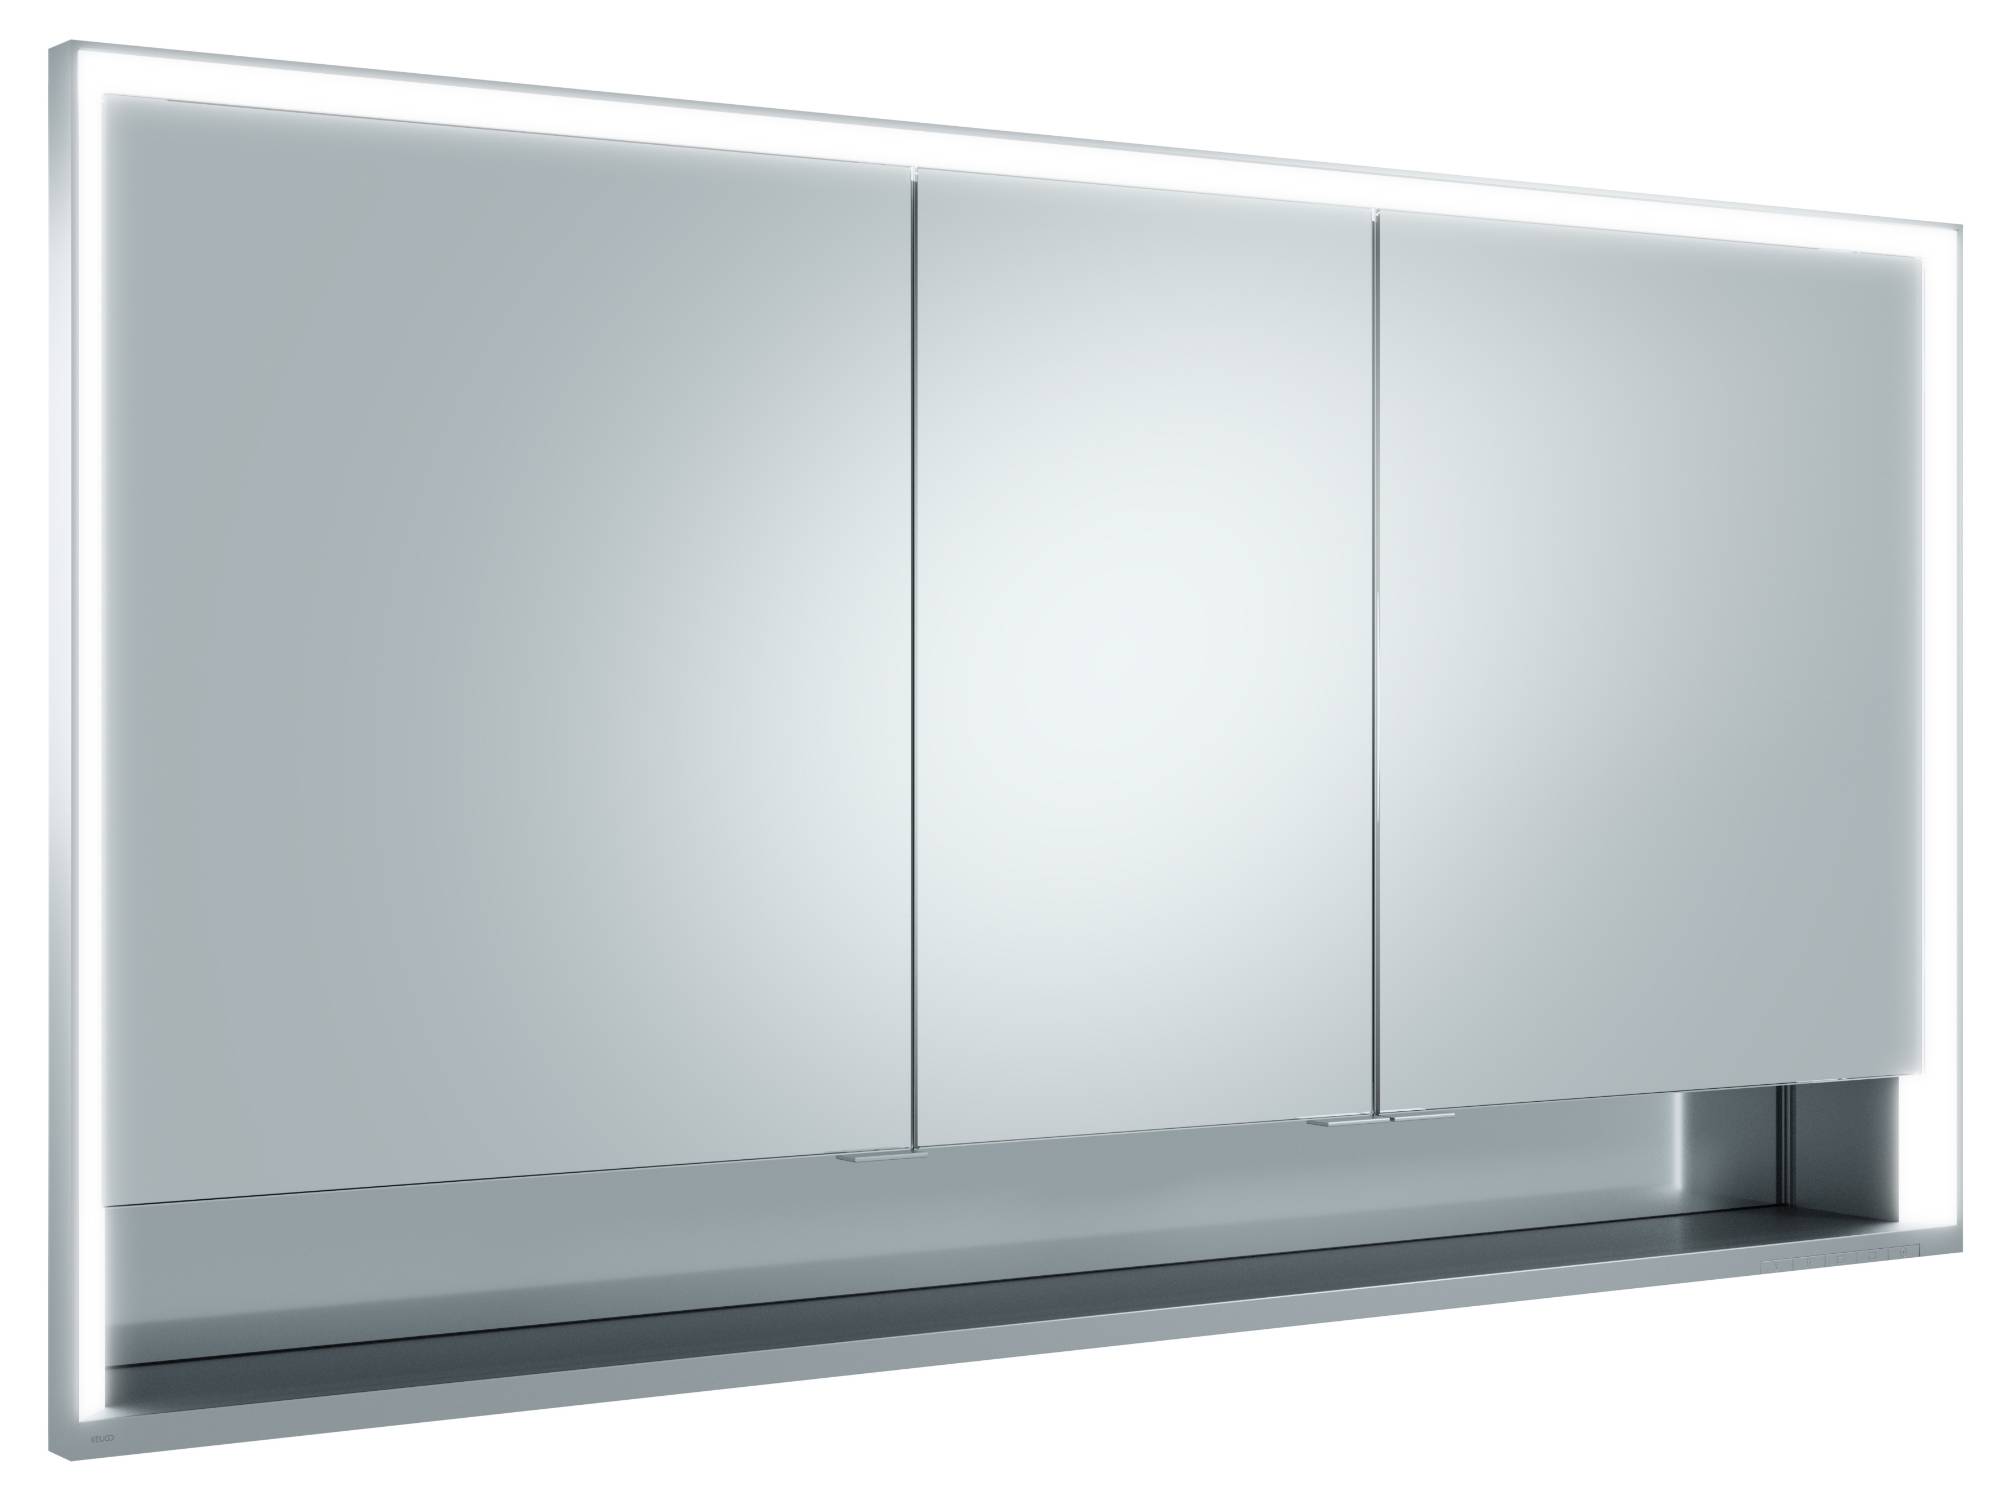 Bathroom Mirror Cabinet - (3 Door) with Lighting - Recessed & Wall Mounted options - ROYAL LUMOS - Mirror cabinet